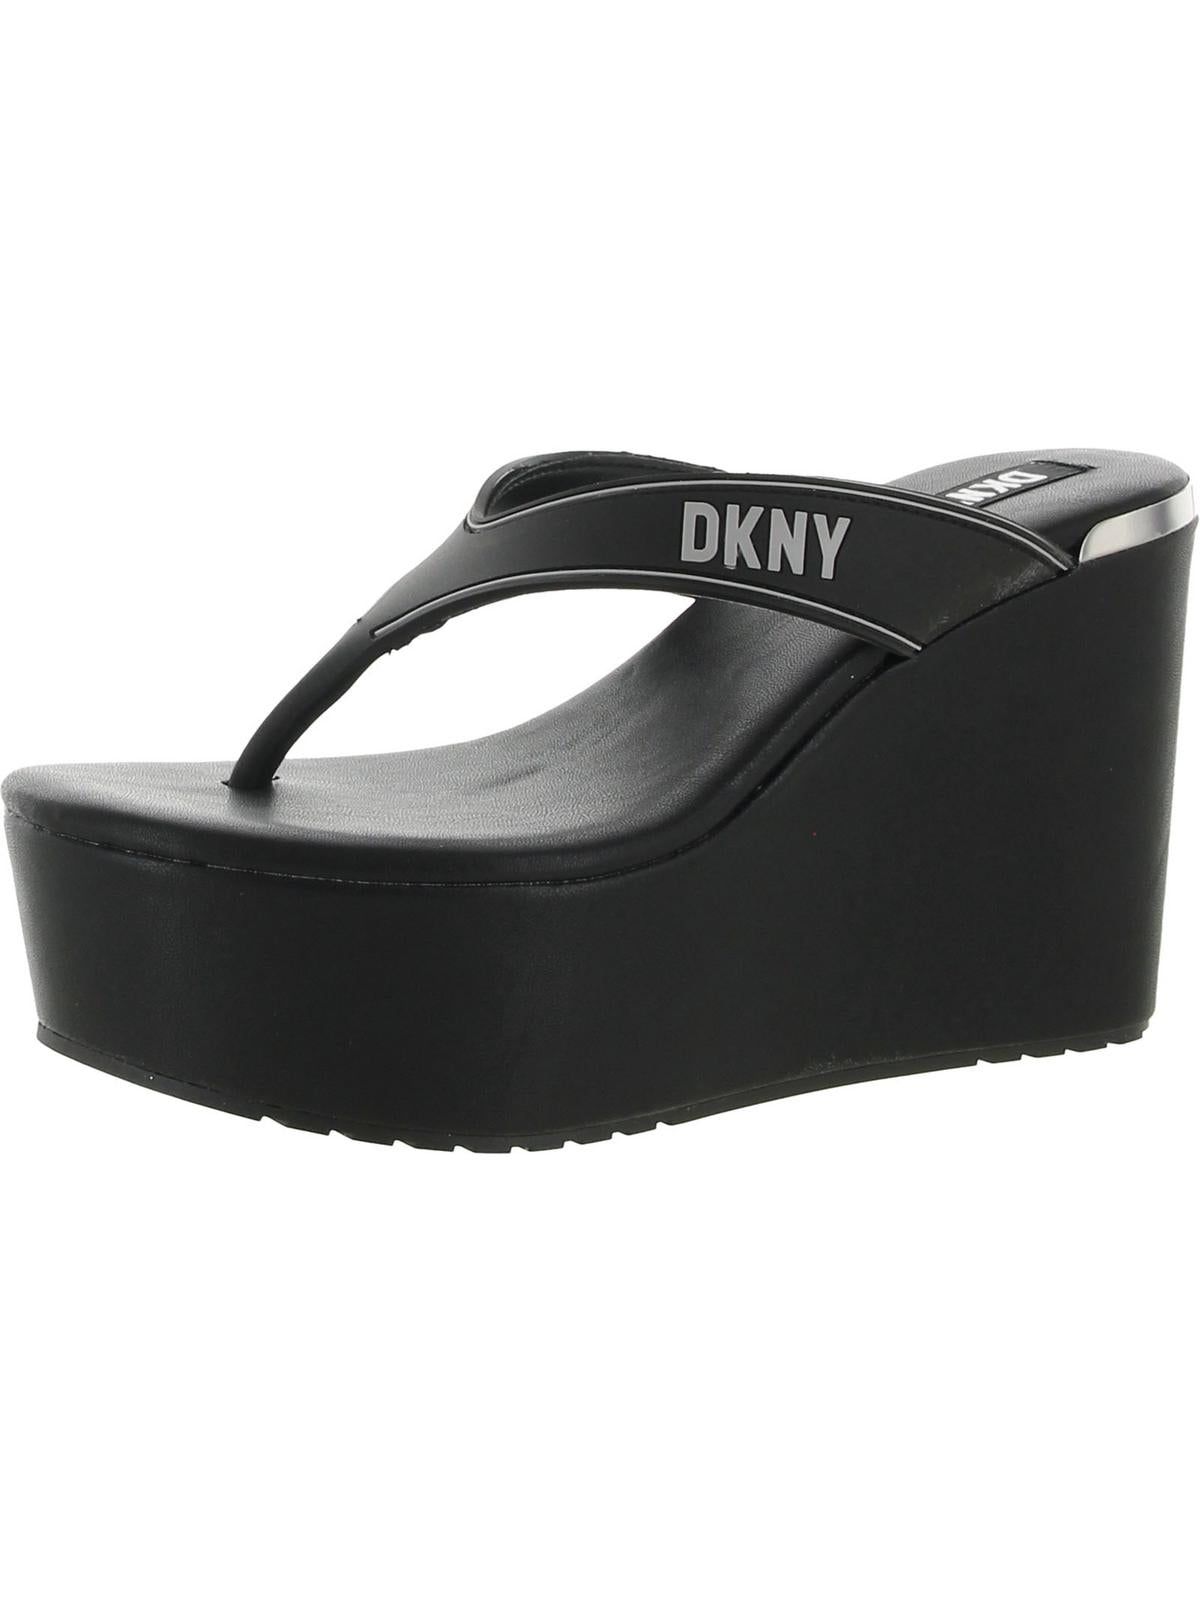 DKNY Women's Shoe Sz 8 (US Women's) TRA Thong Sandals Wedge Heels Black